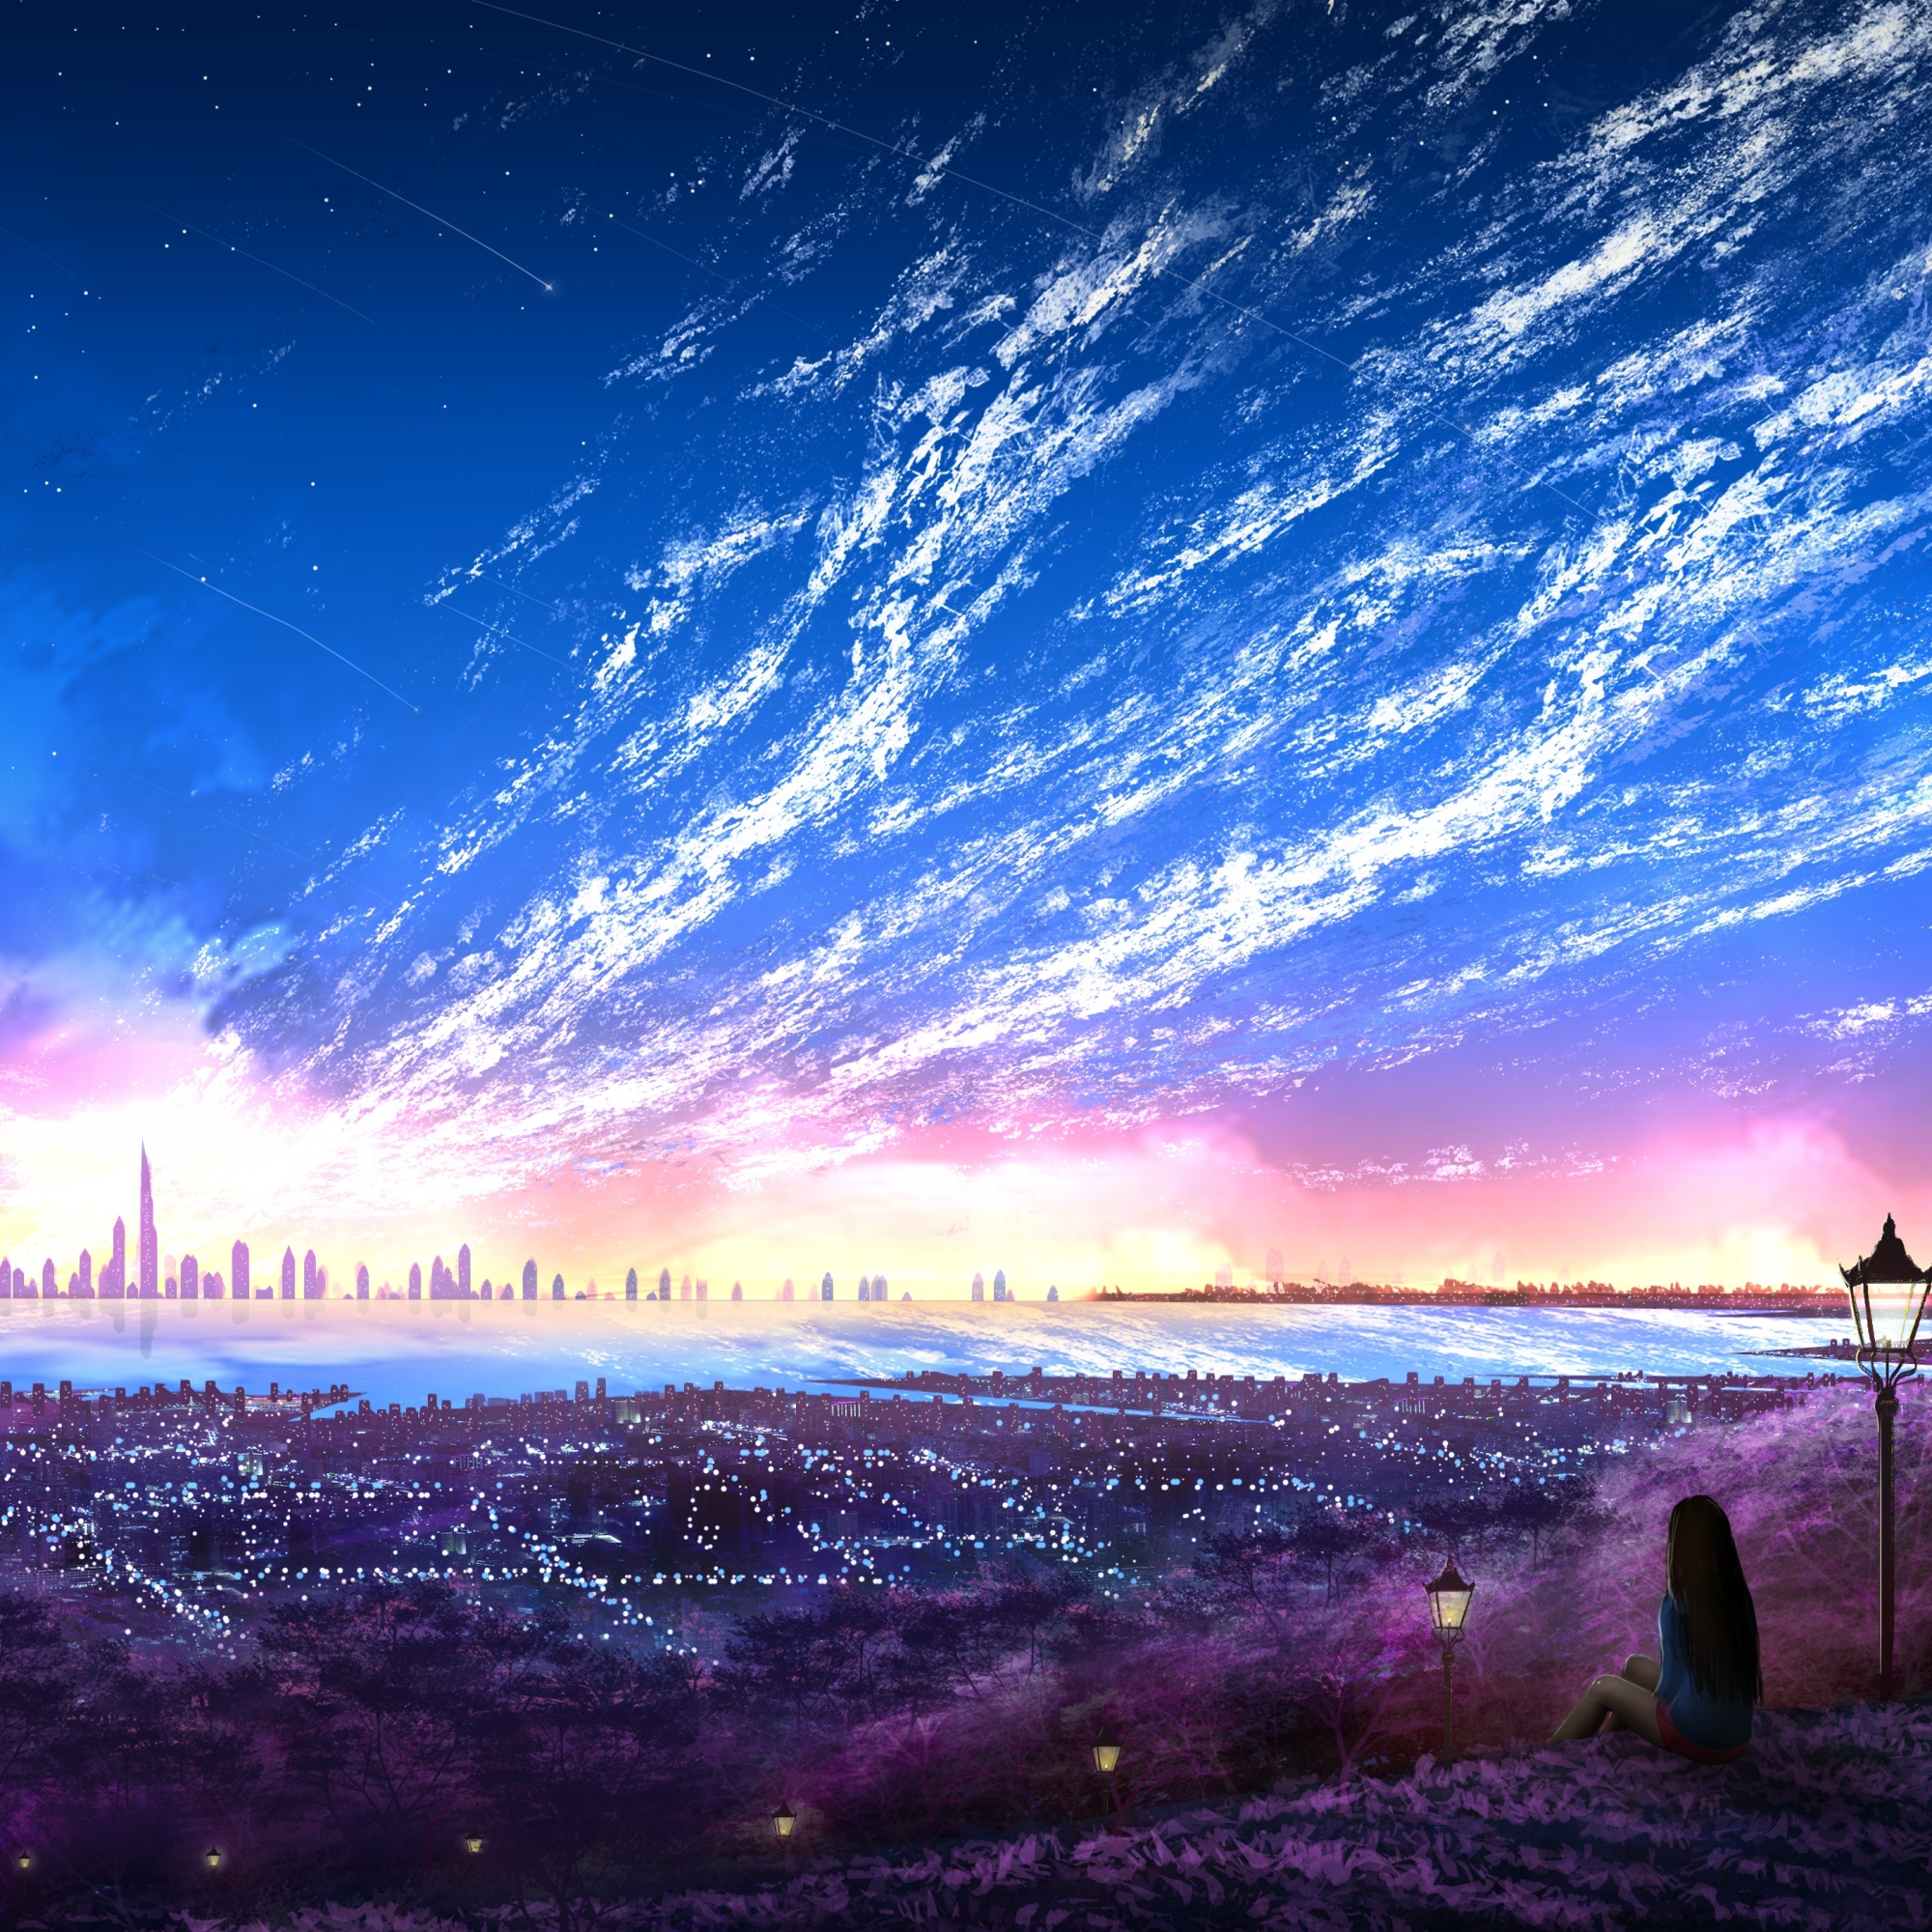 Anime City Pfp by Rico De Zoysa